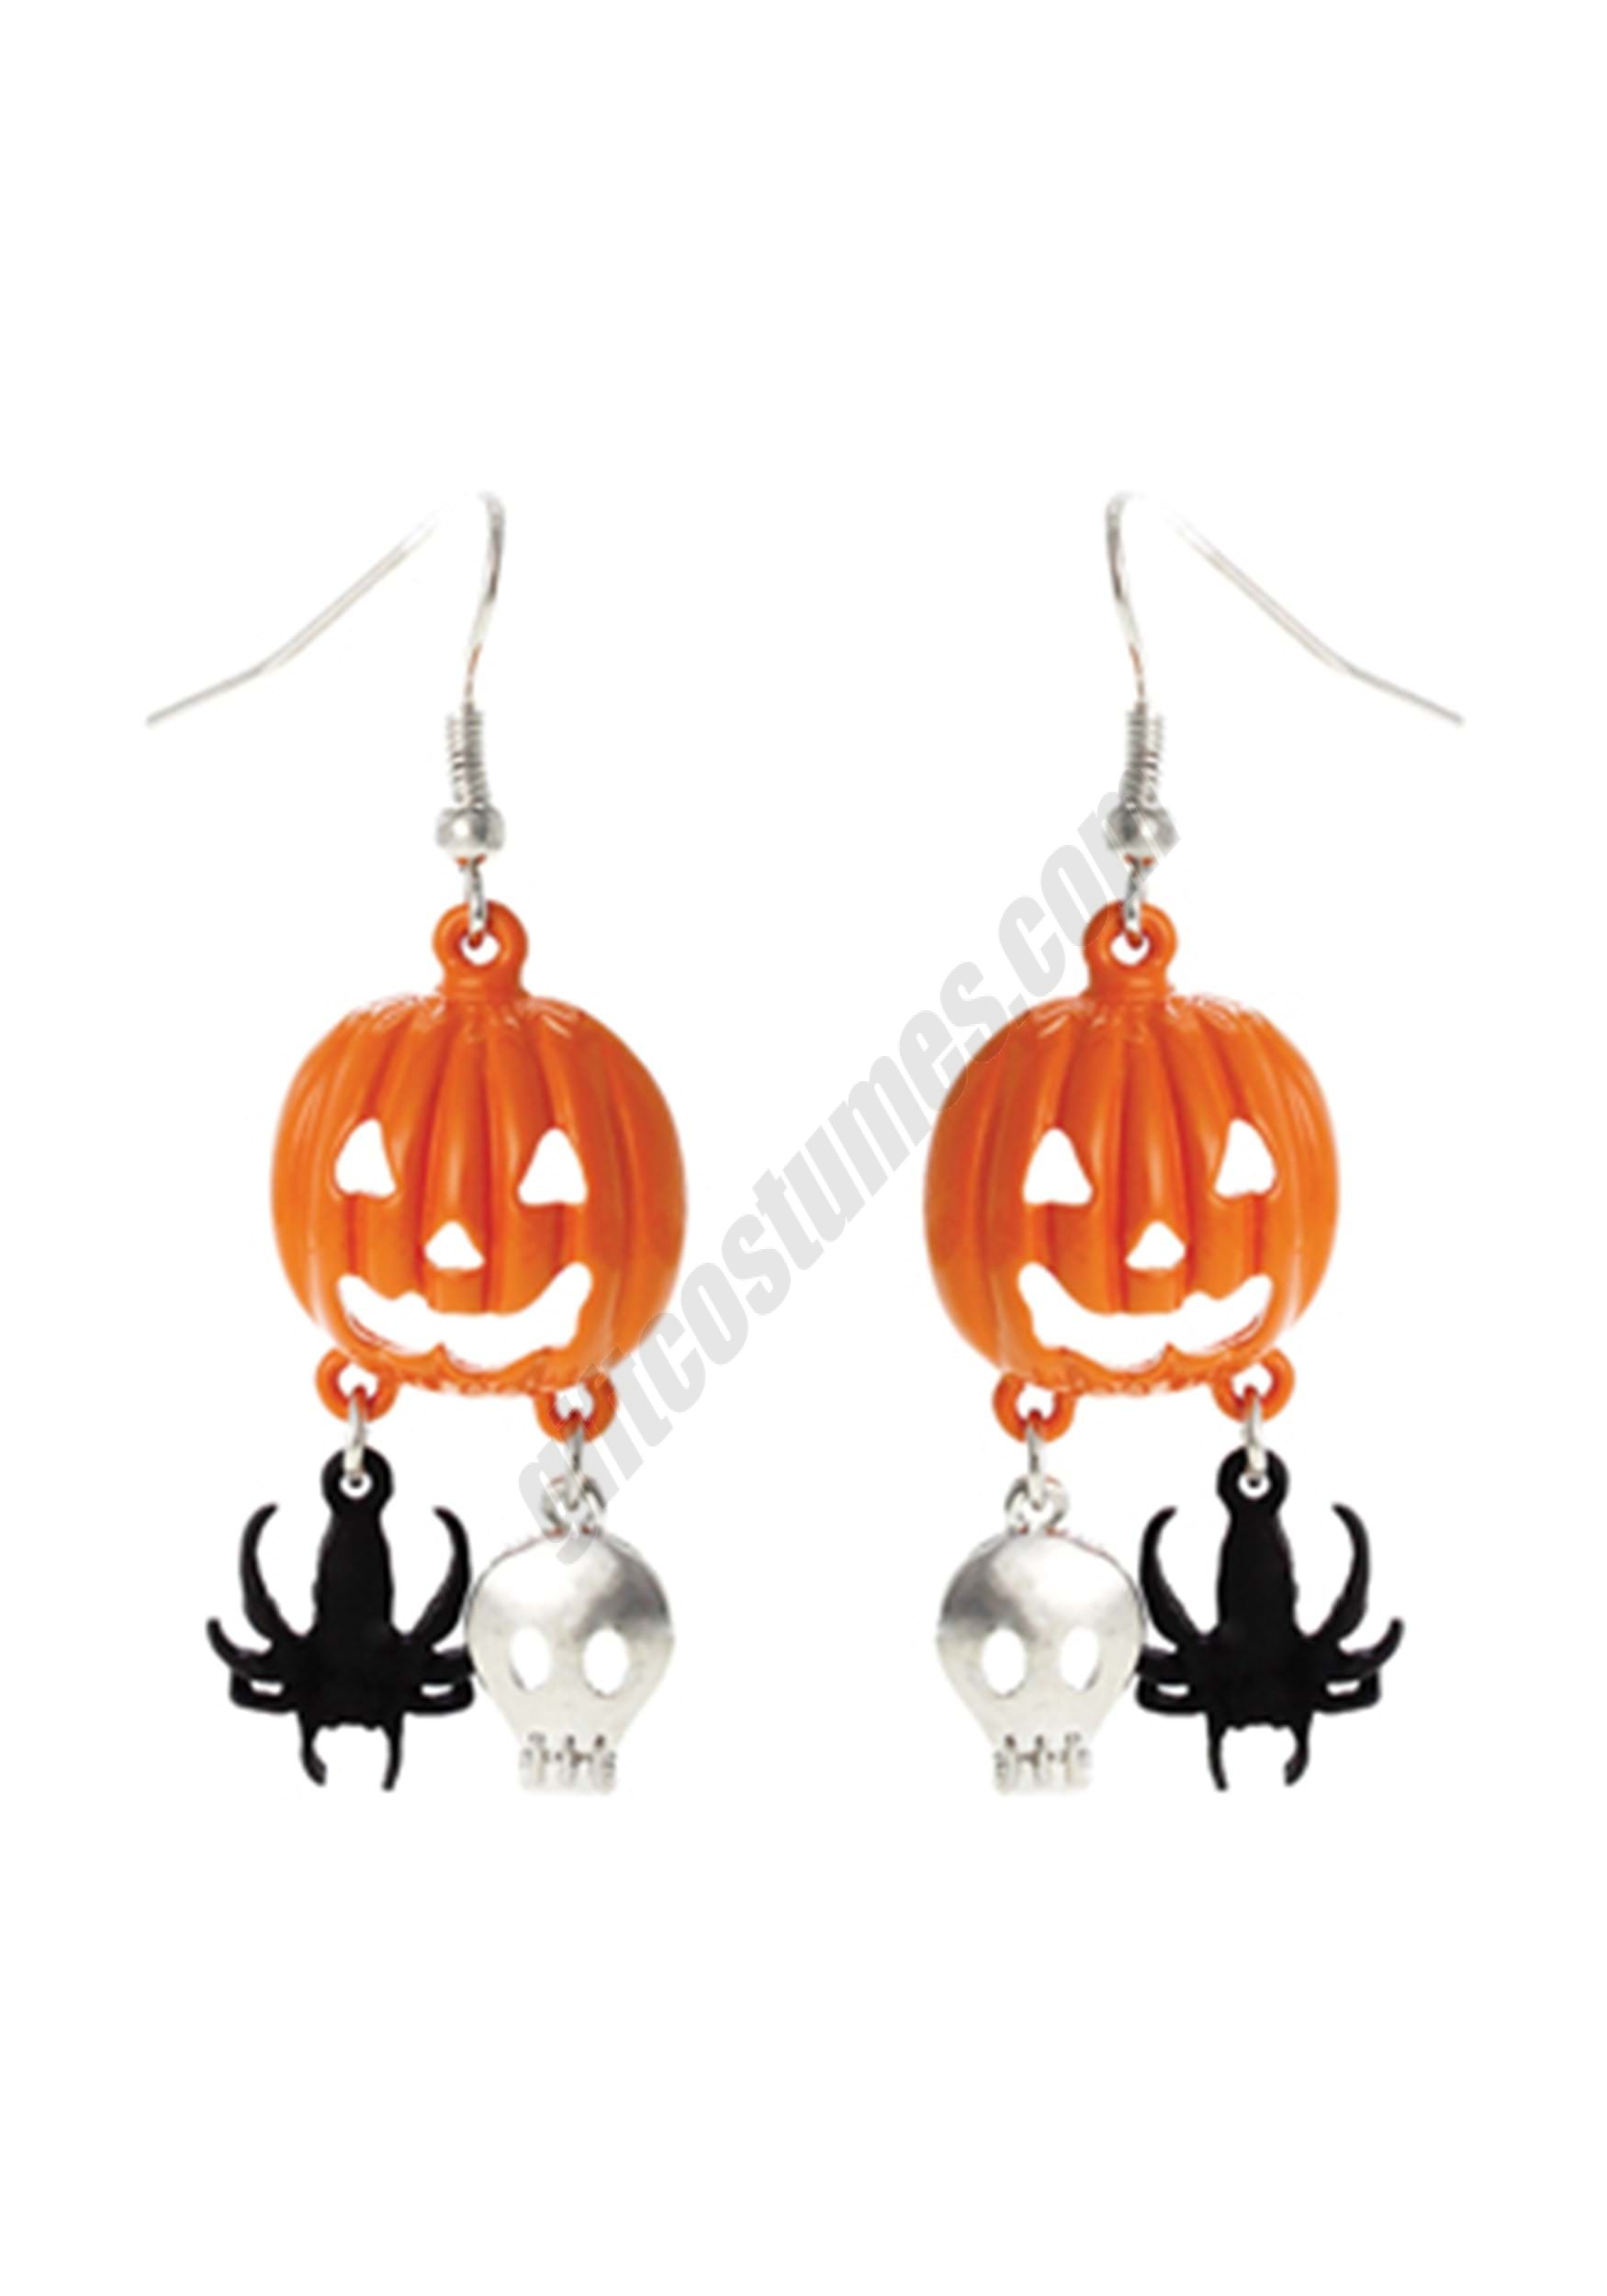 Spider Pumpkin Skull Earrings Promotions - Spider Pumpkin Skull Earrings Promotions